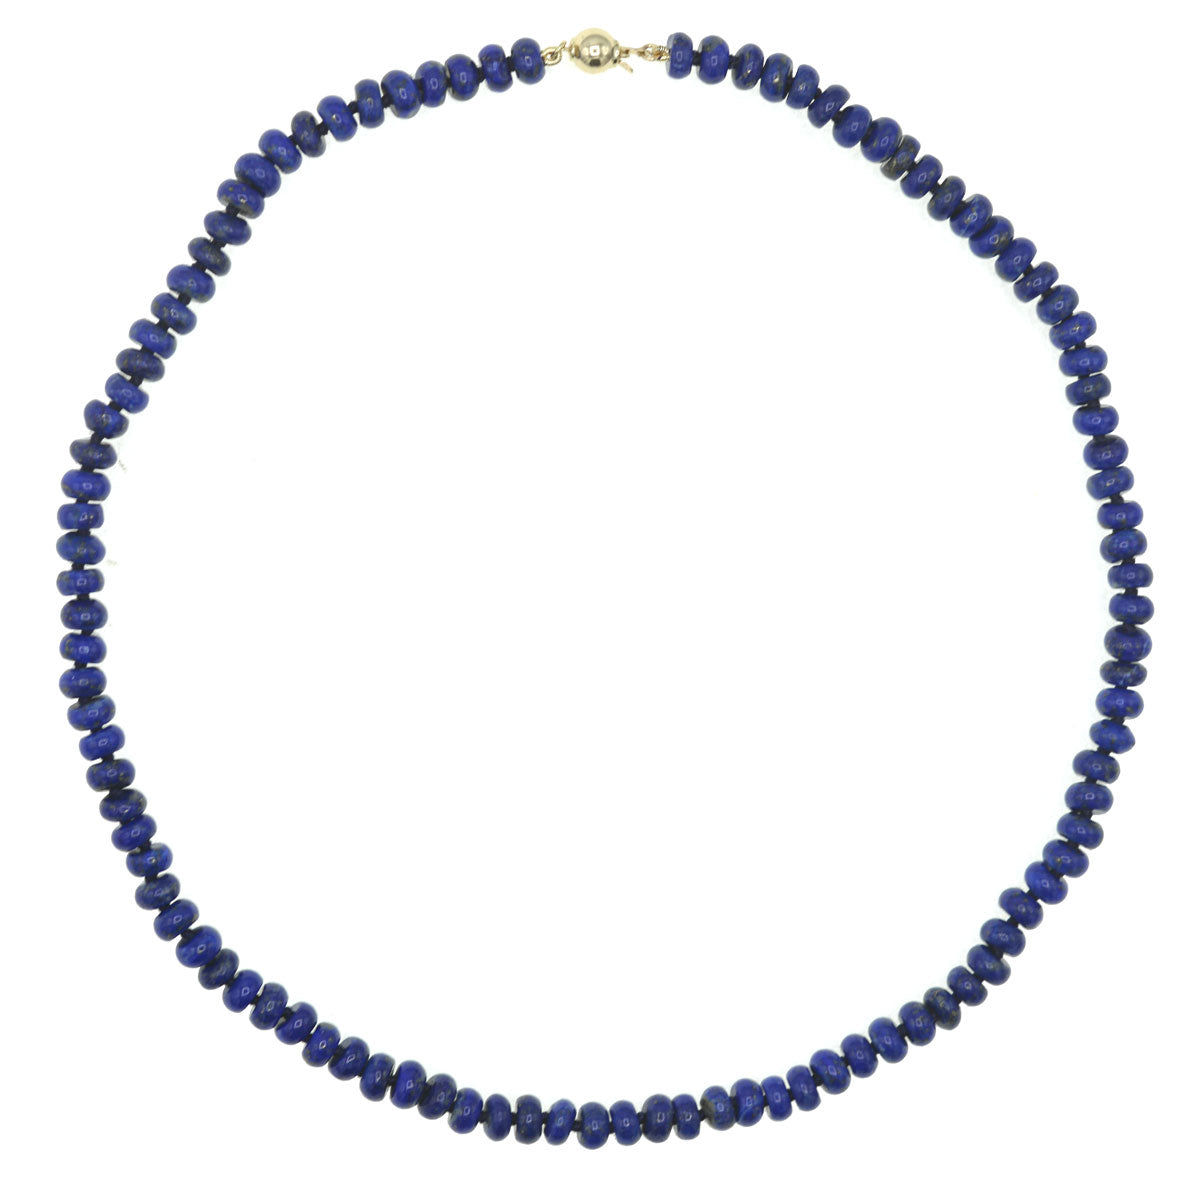 Beaded Lapis Necklace - Medium Size